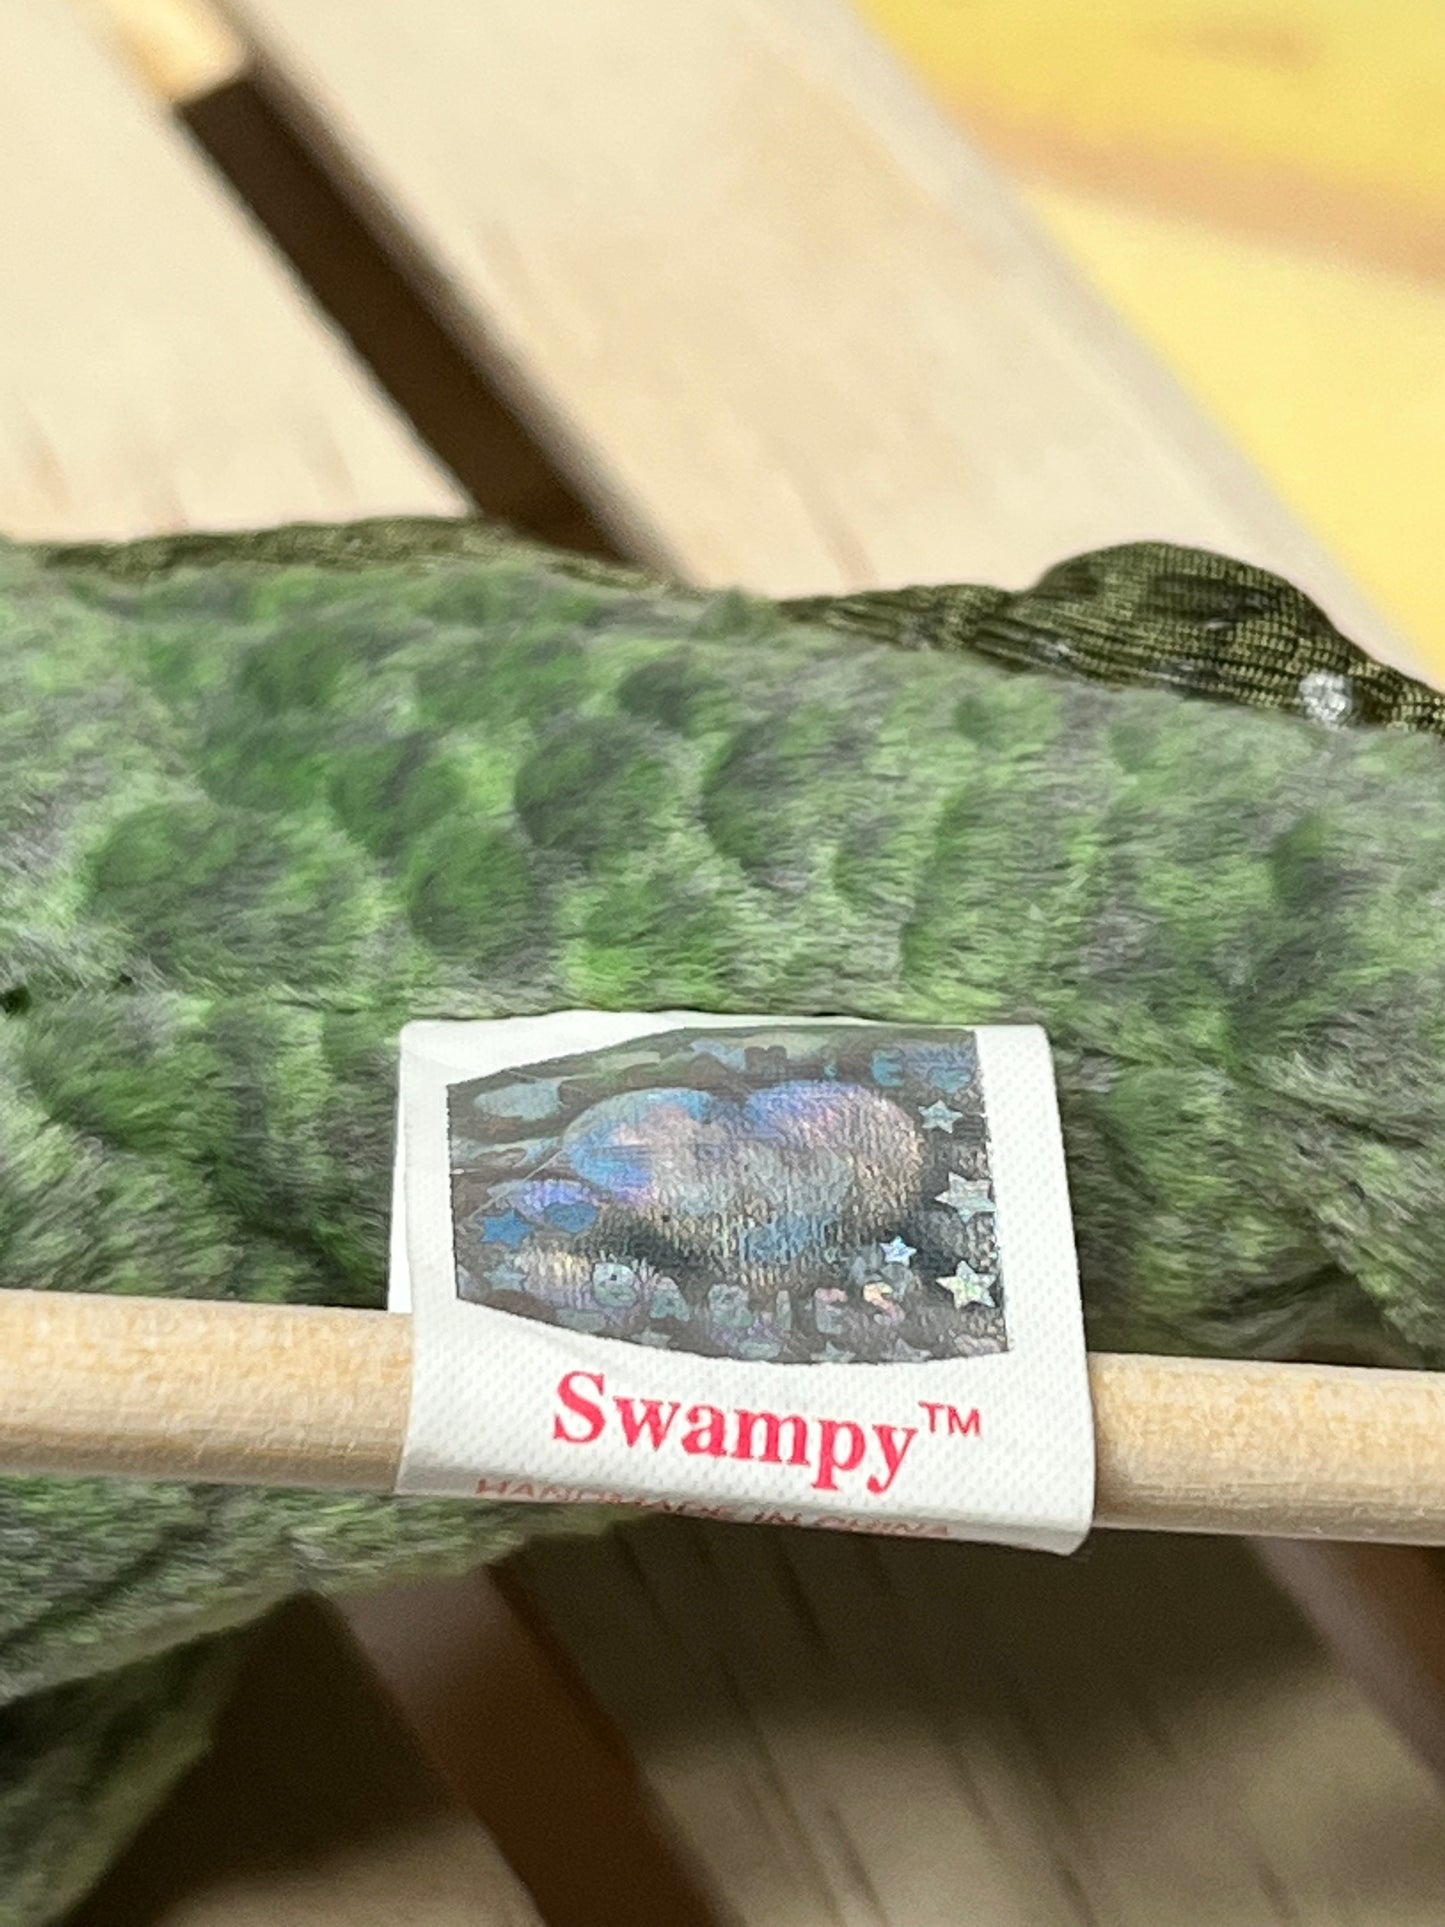 Ty Beanie Babies “Swampy” The Alligator, January 24 2000